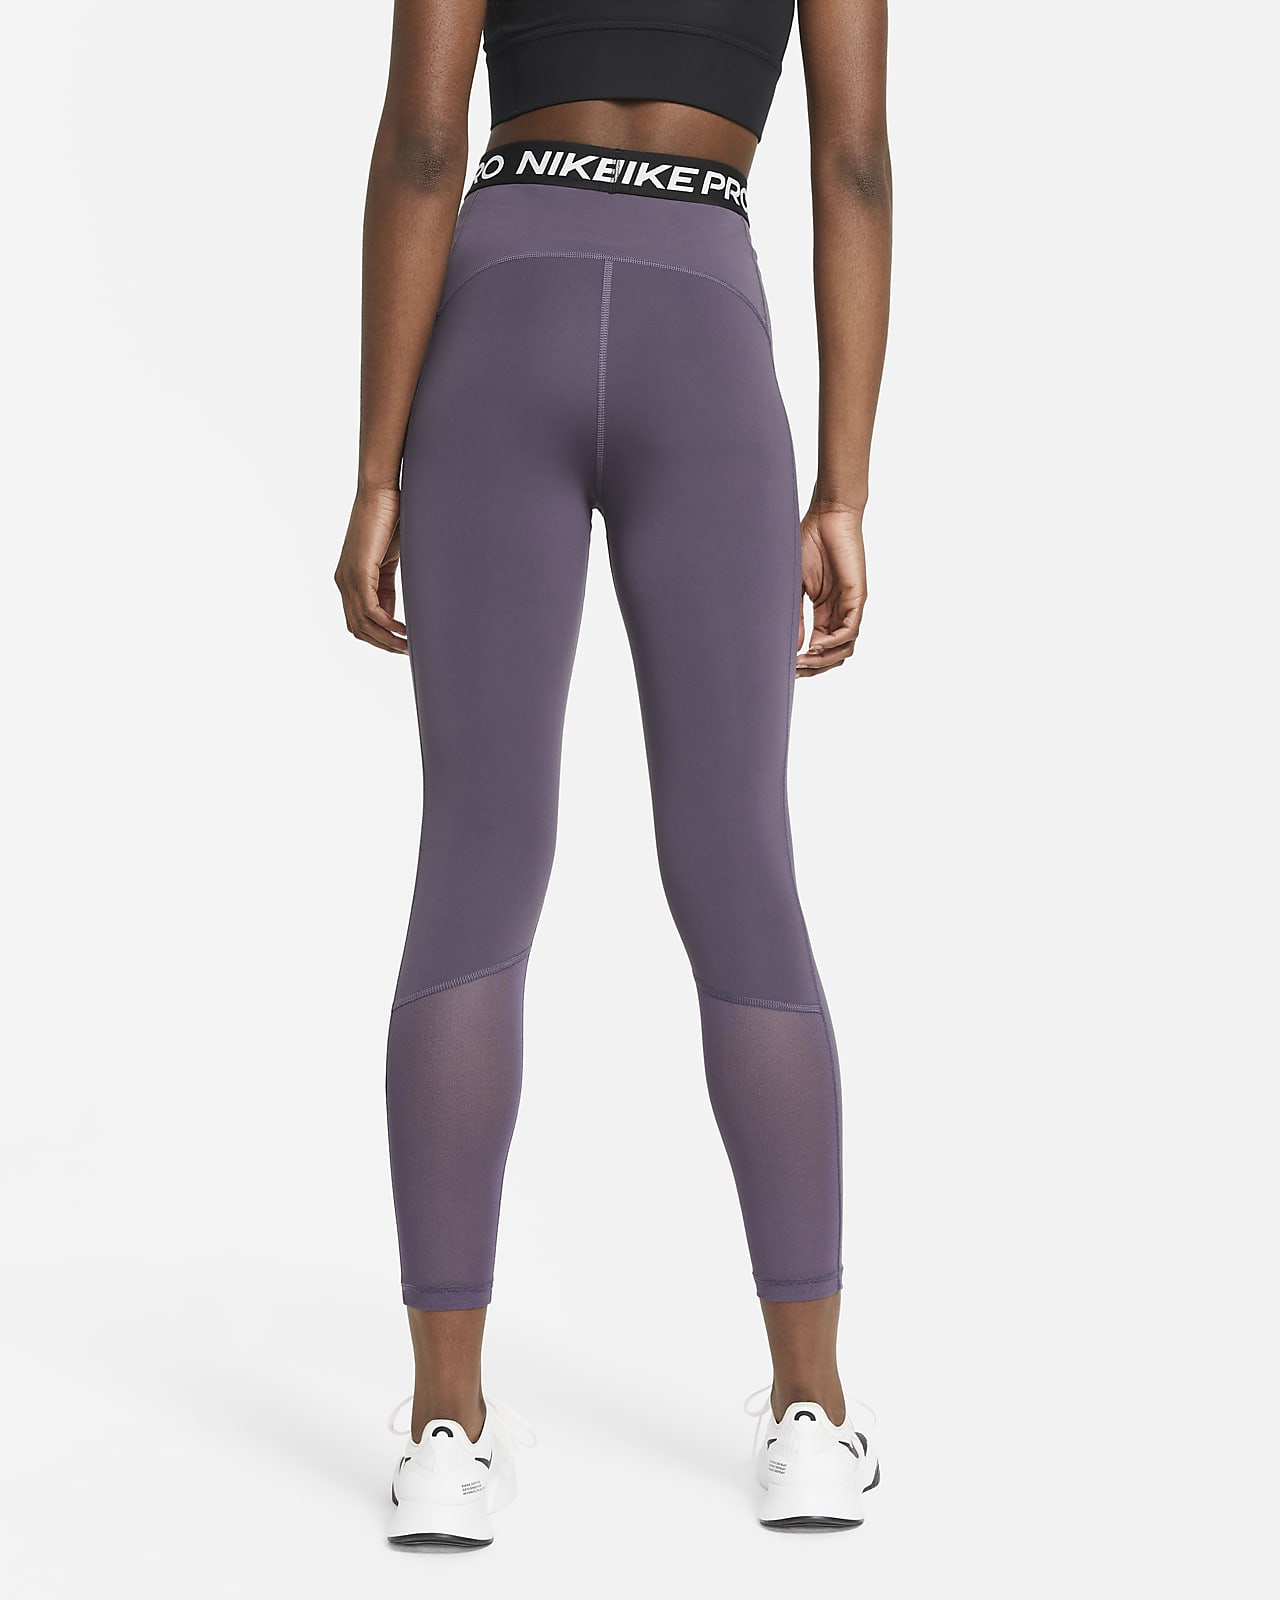 nike pro purple leggings